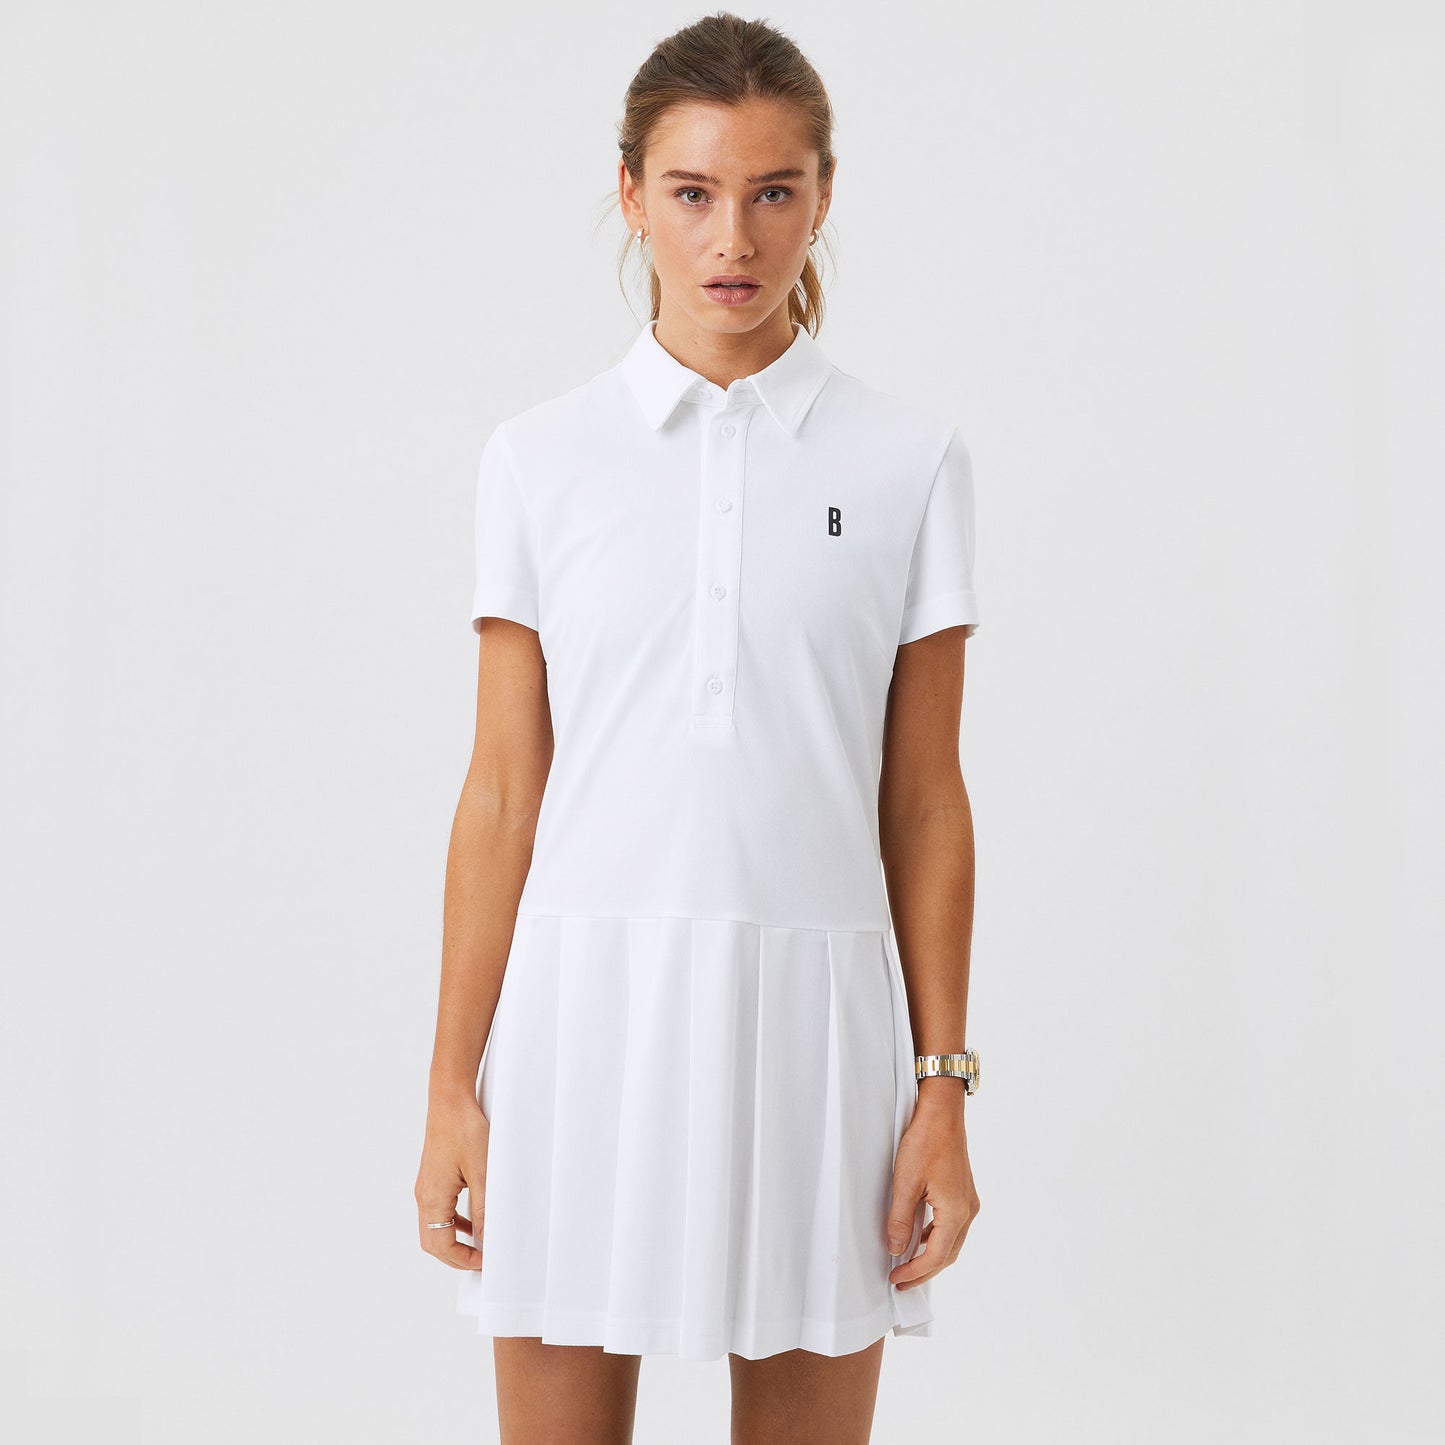 Björn Borg Ace Women's Tennis Polo Dress White (5)